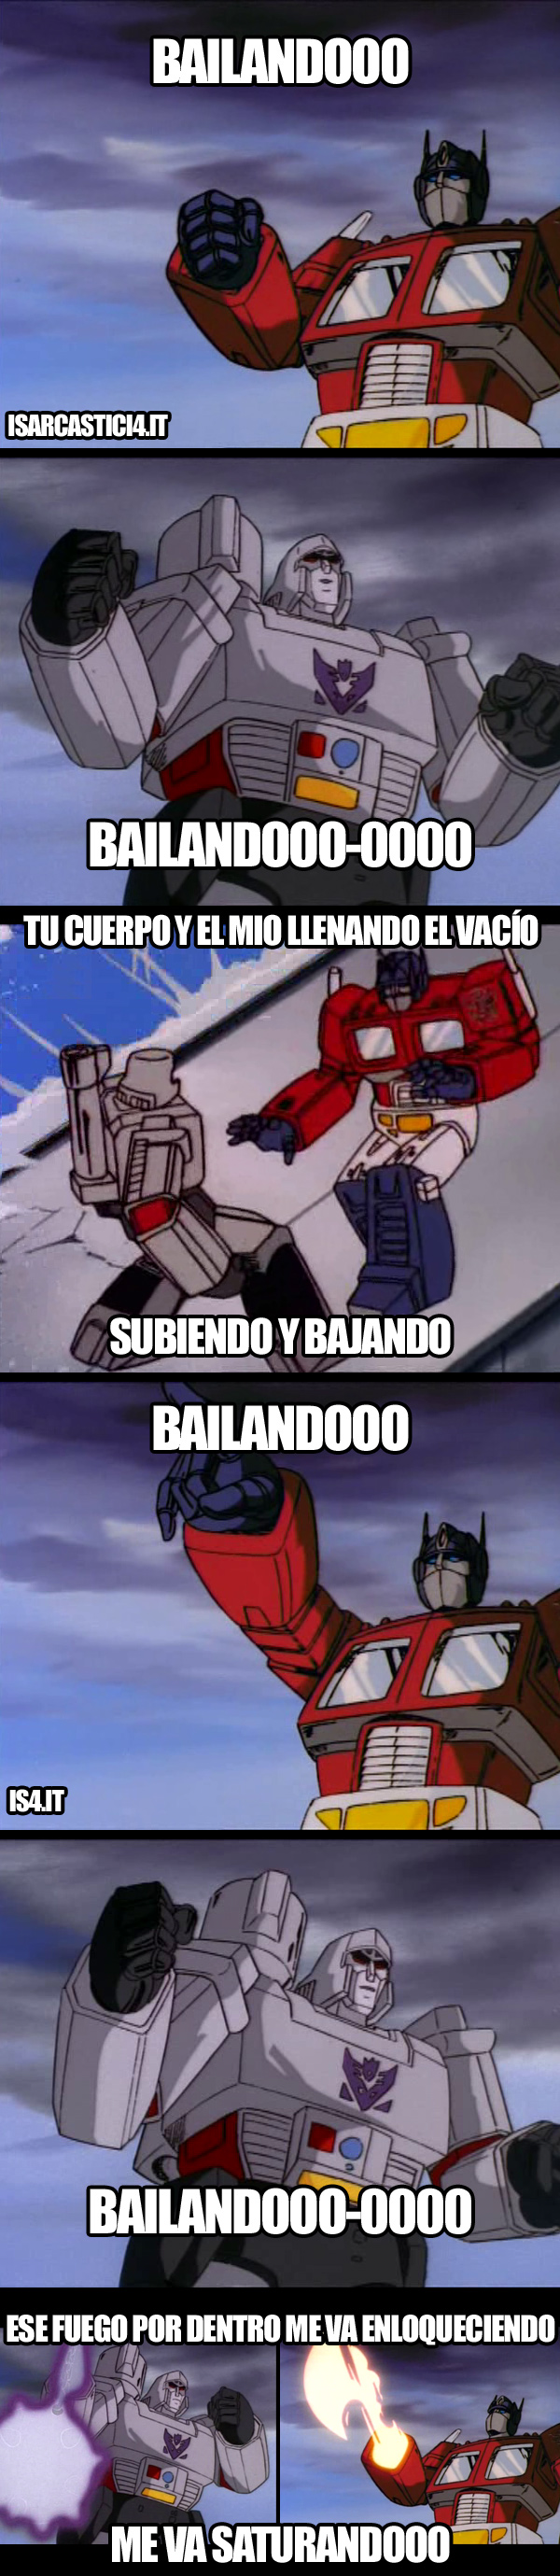 Transformers meme - Enrique Iglesias feeat. Descemer Bueno, Gente de Zona